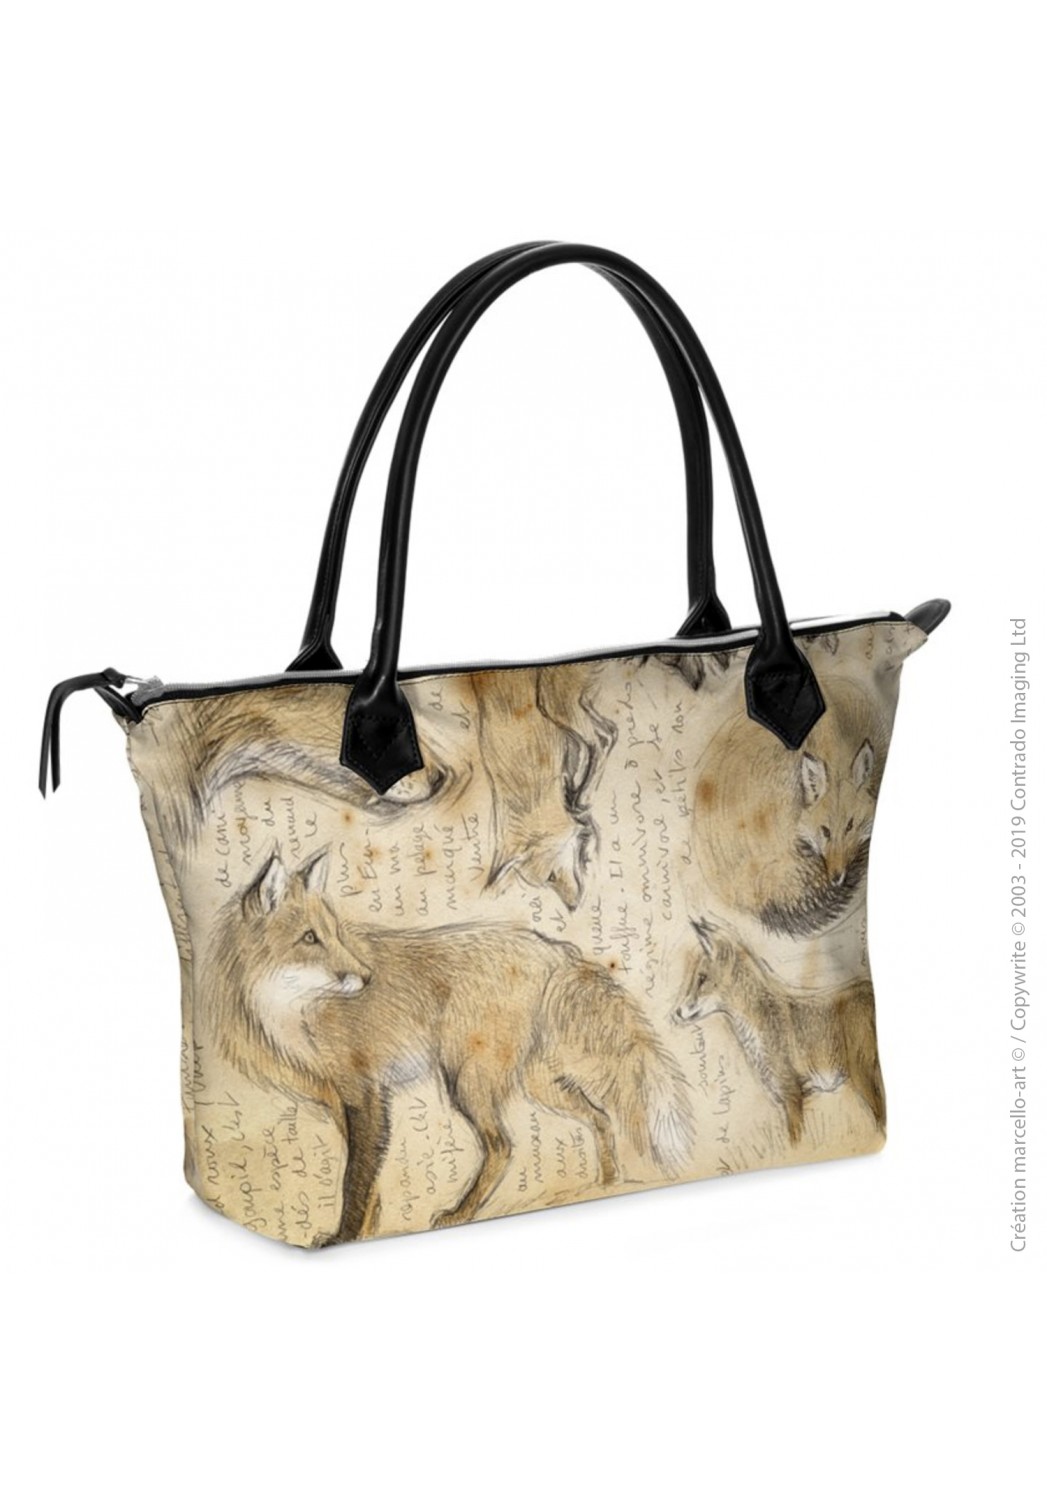 Marcello-art: Fashion accessory Zipped bag 336 red fox